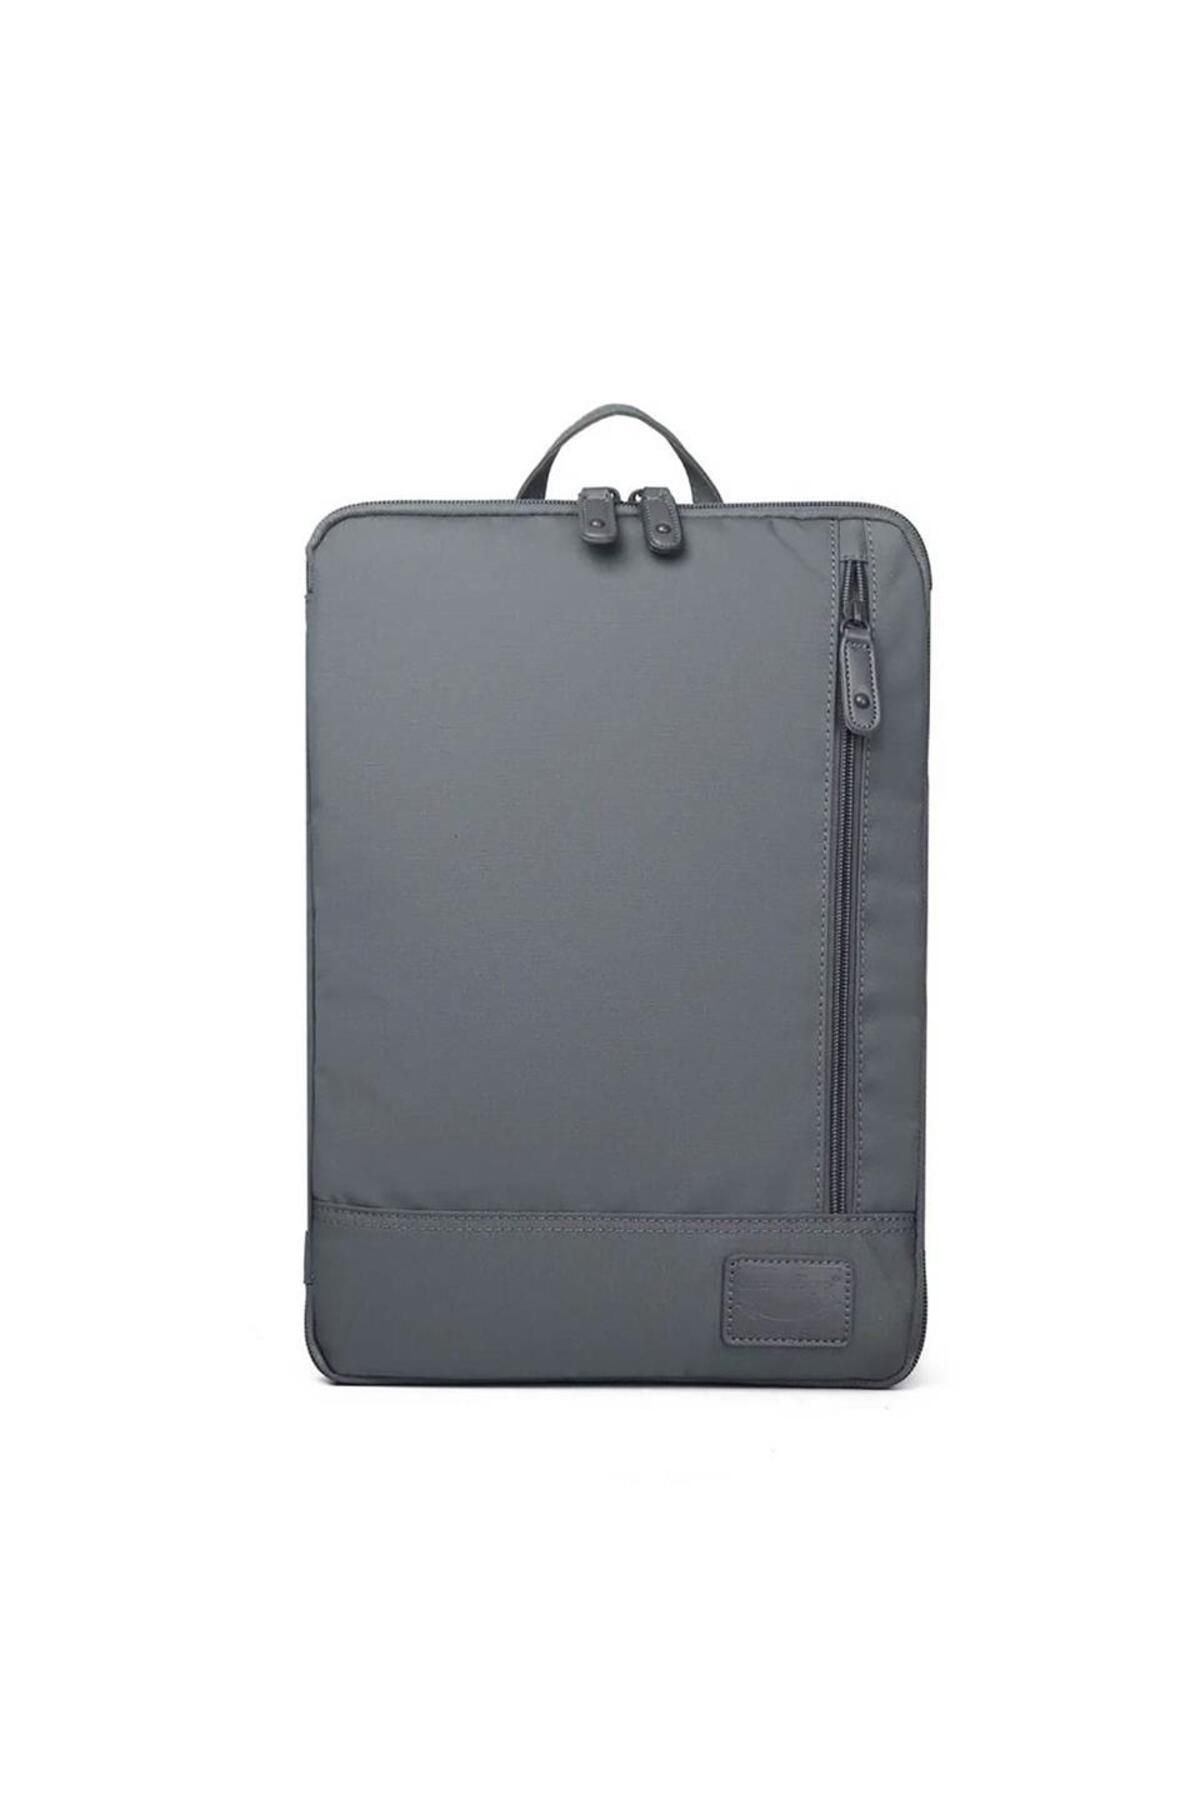 Smart Bags 3191 Laptop & Evrak Çantası Siyah